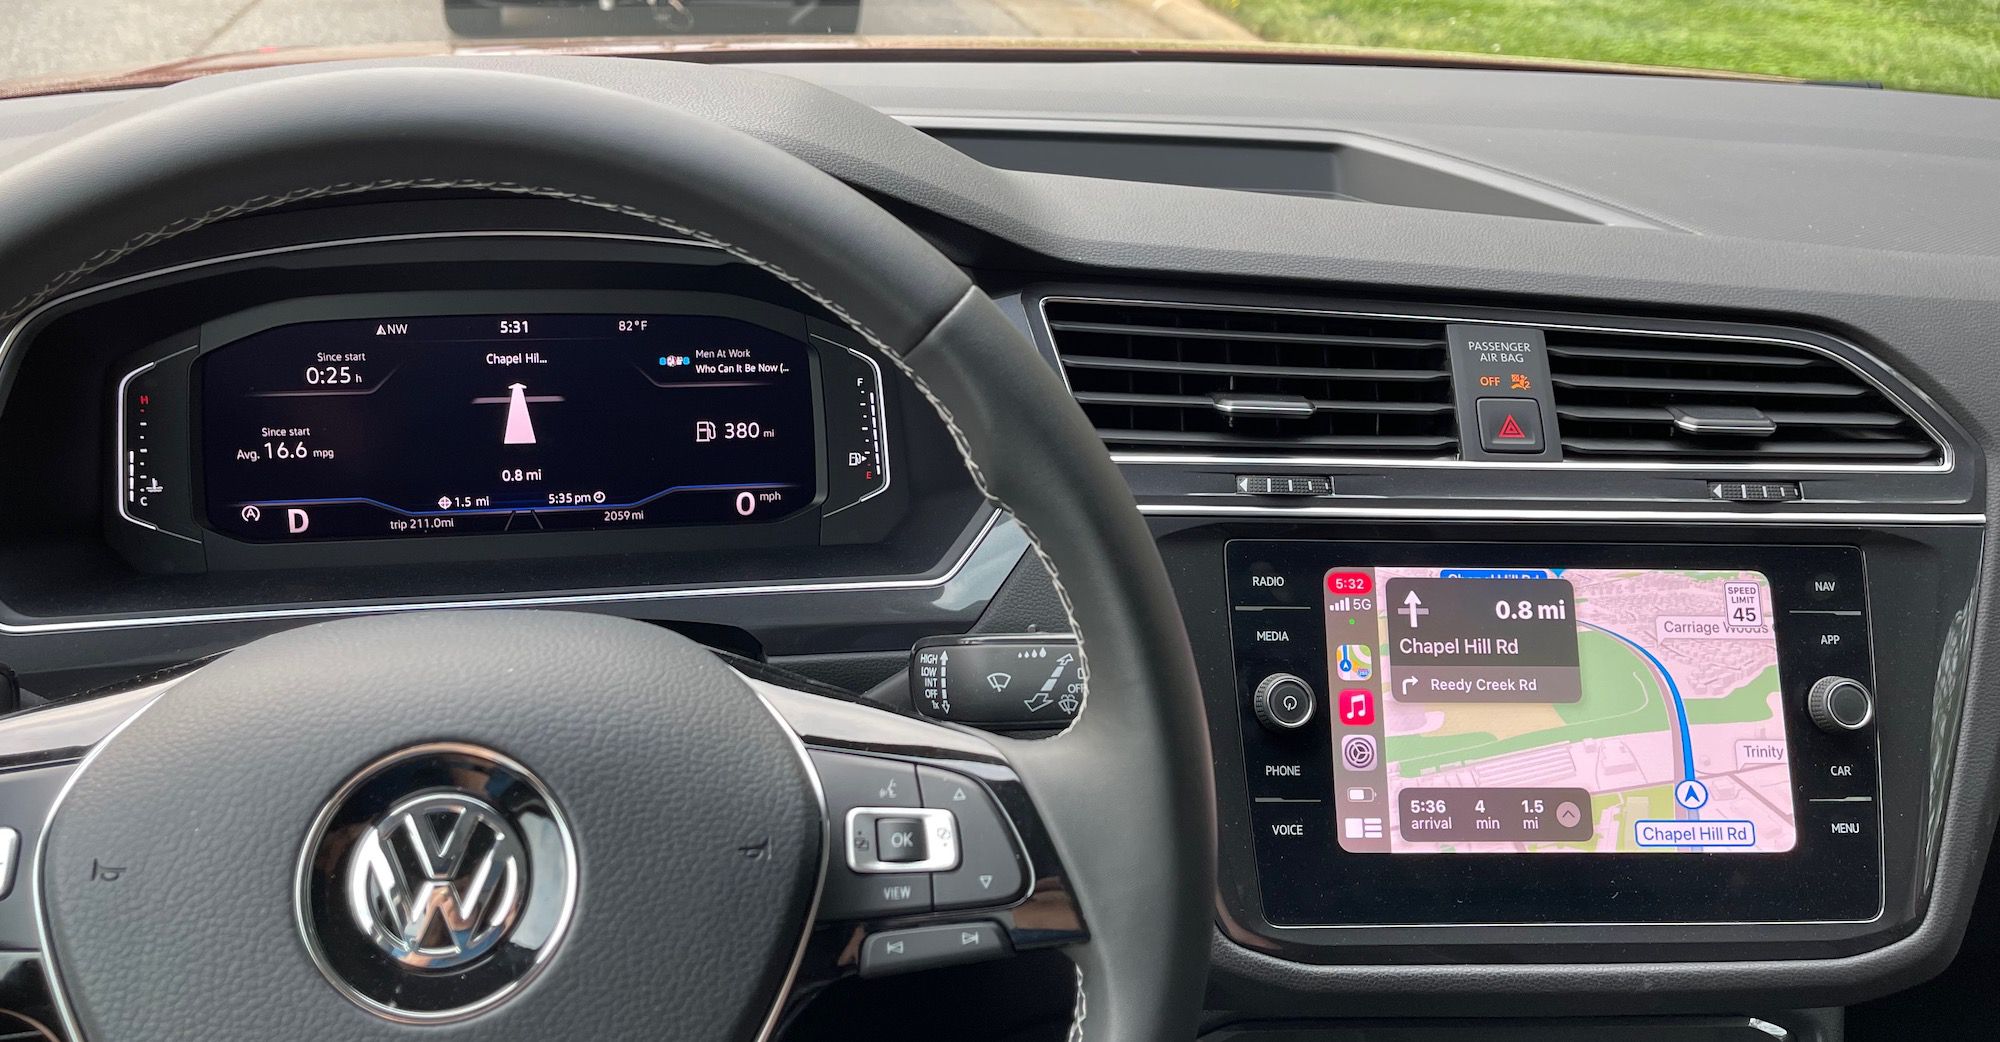 2021 Volkswagen Tiguan - Wireless CarPlay Review - MacRumors